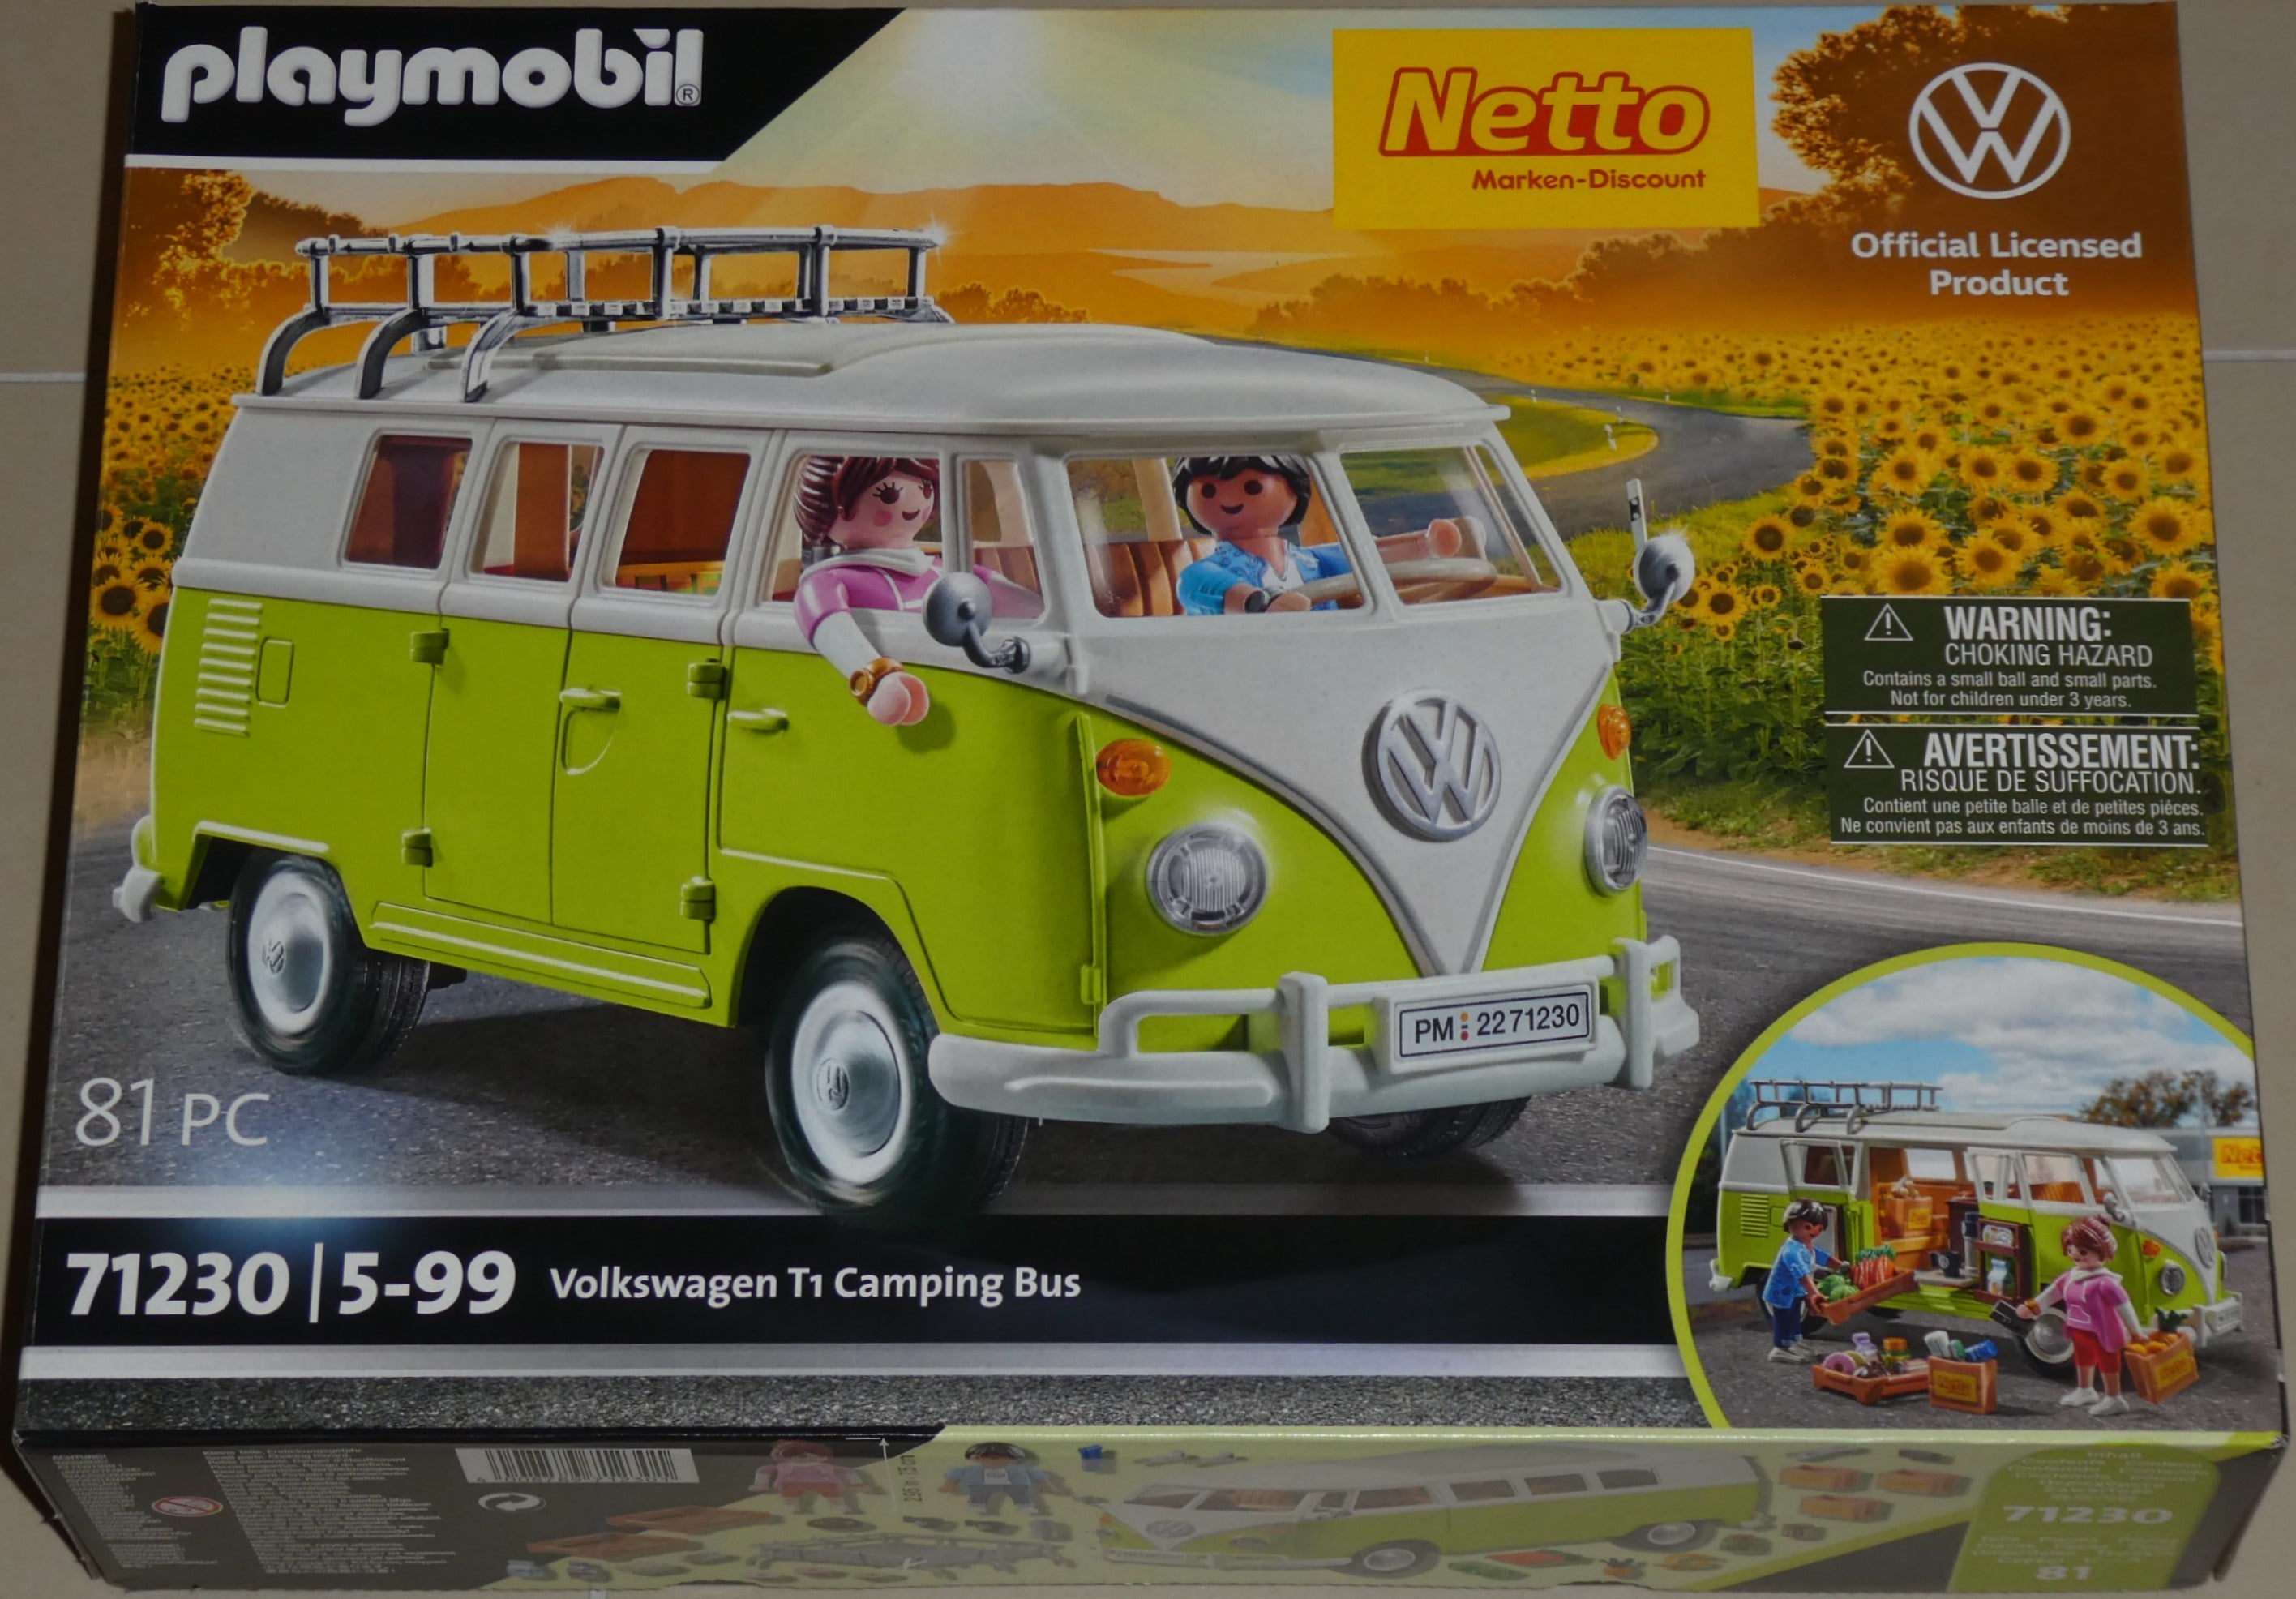 Playmobil 71238 VW T1 Camping Bus Sonderedition Netto NEU / OVP